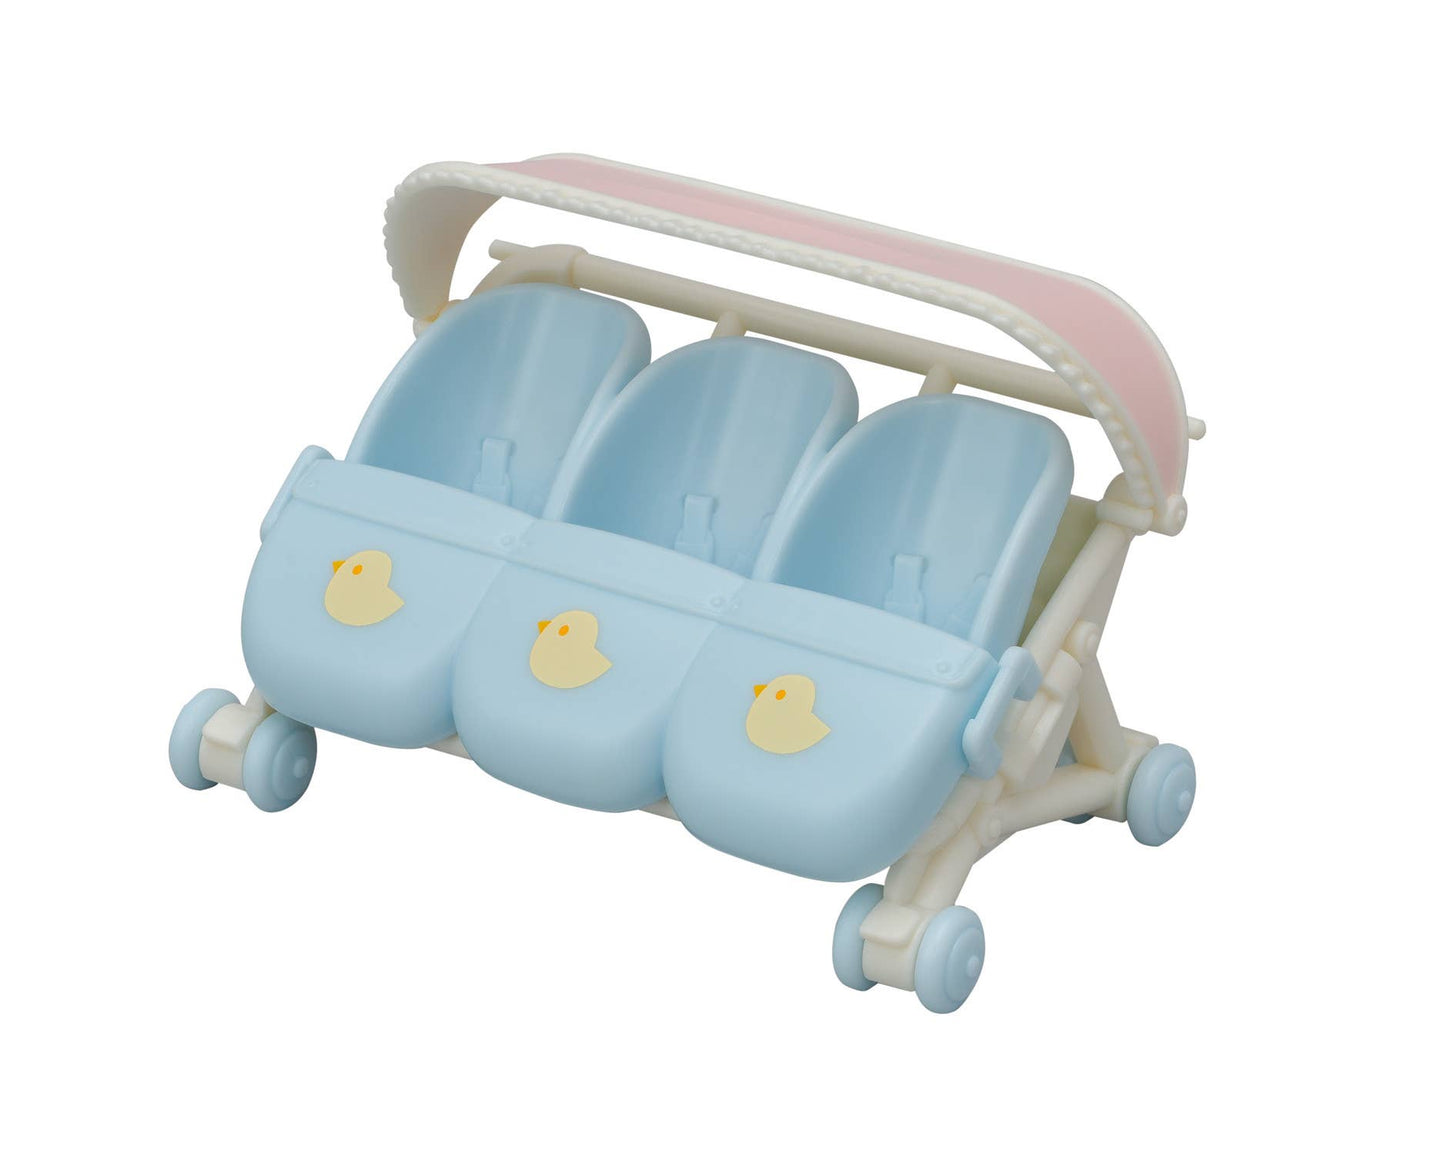 Dollhouse Triplets Stroller Accessory